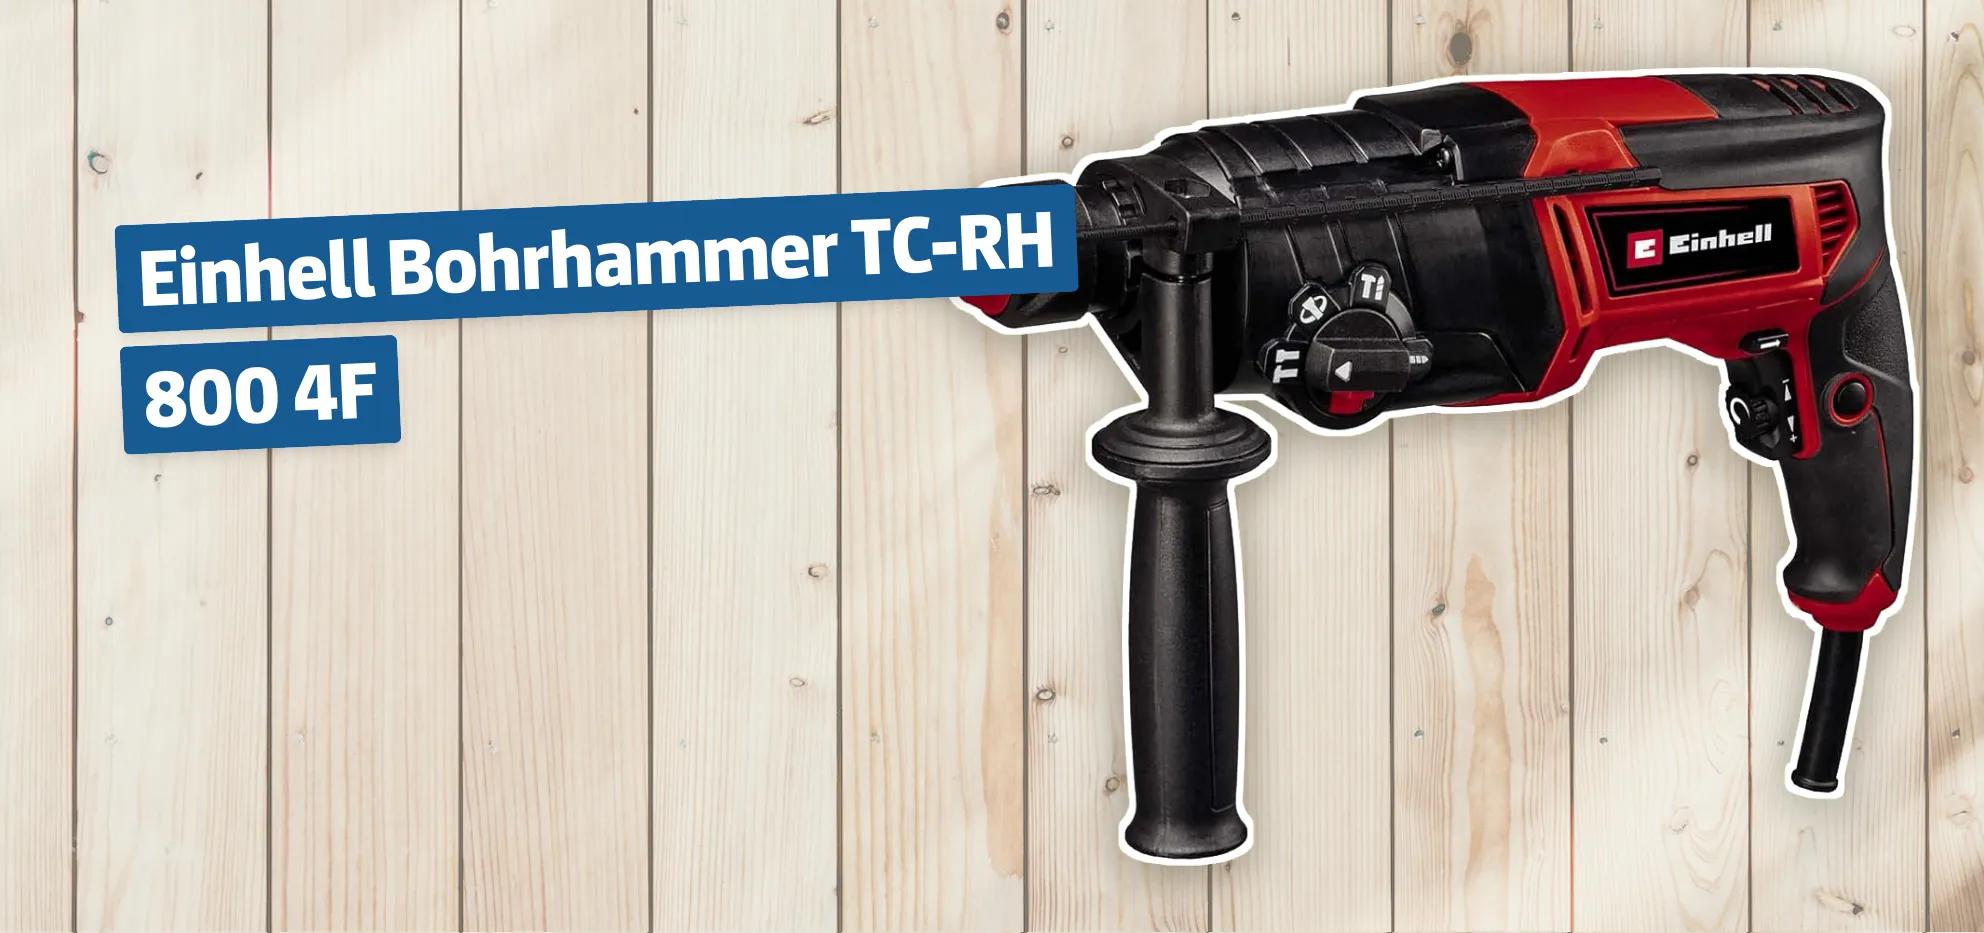 Einhell Bohrhammer TC-RH 800 4F